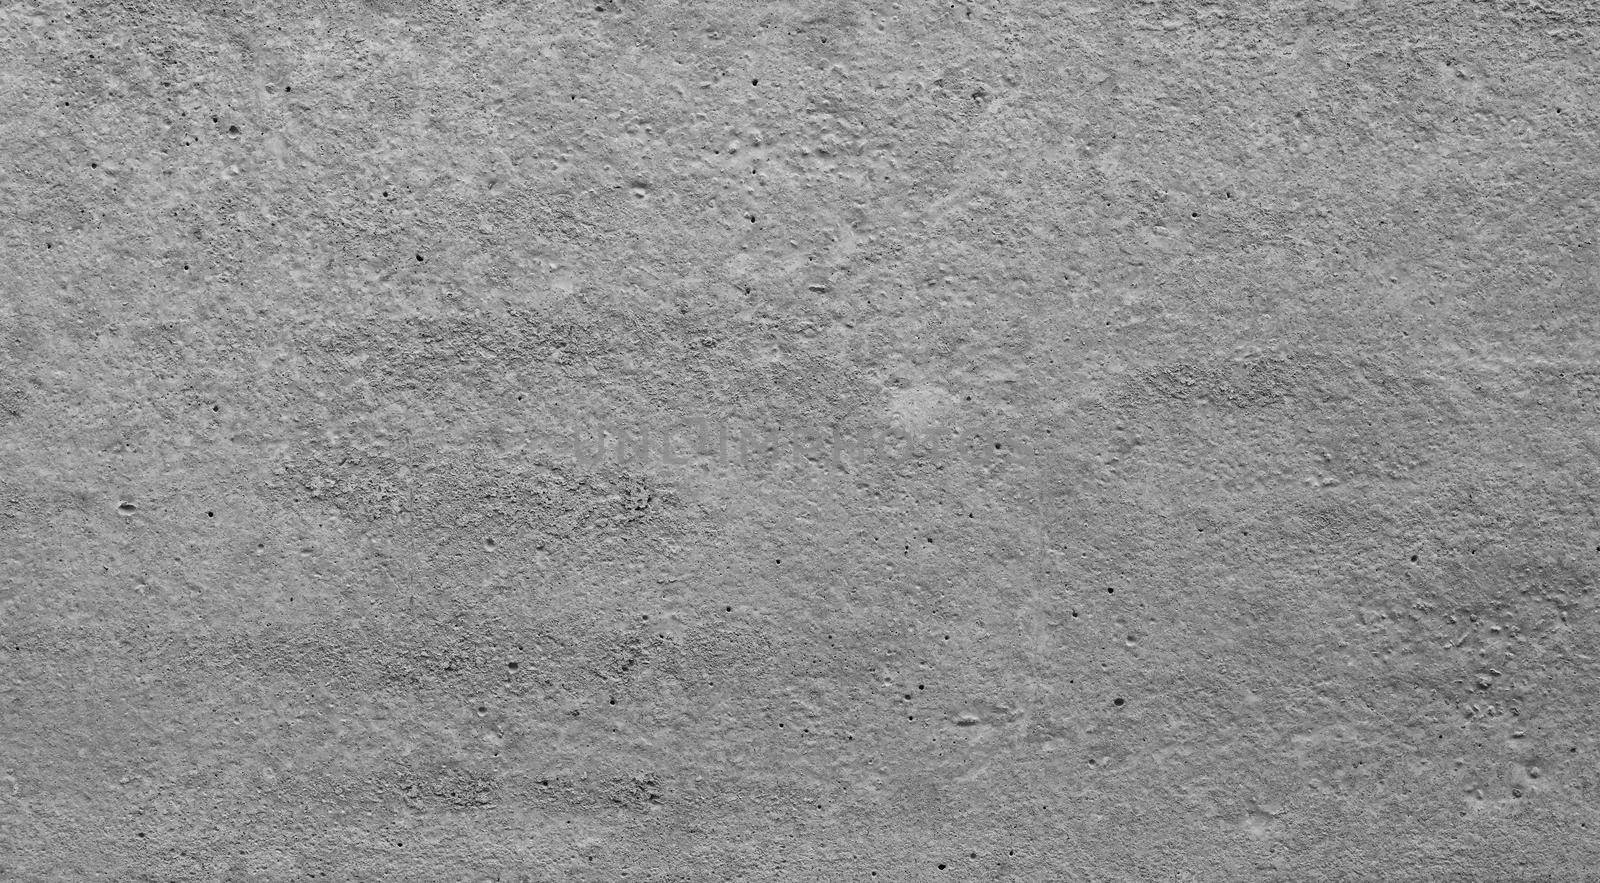 Uneven gray concrete background texture by BreakingTheWalls